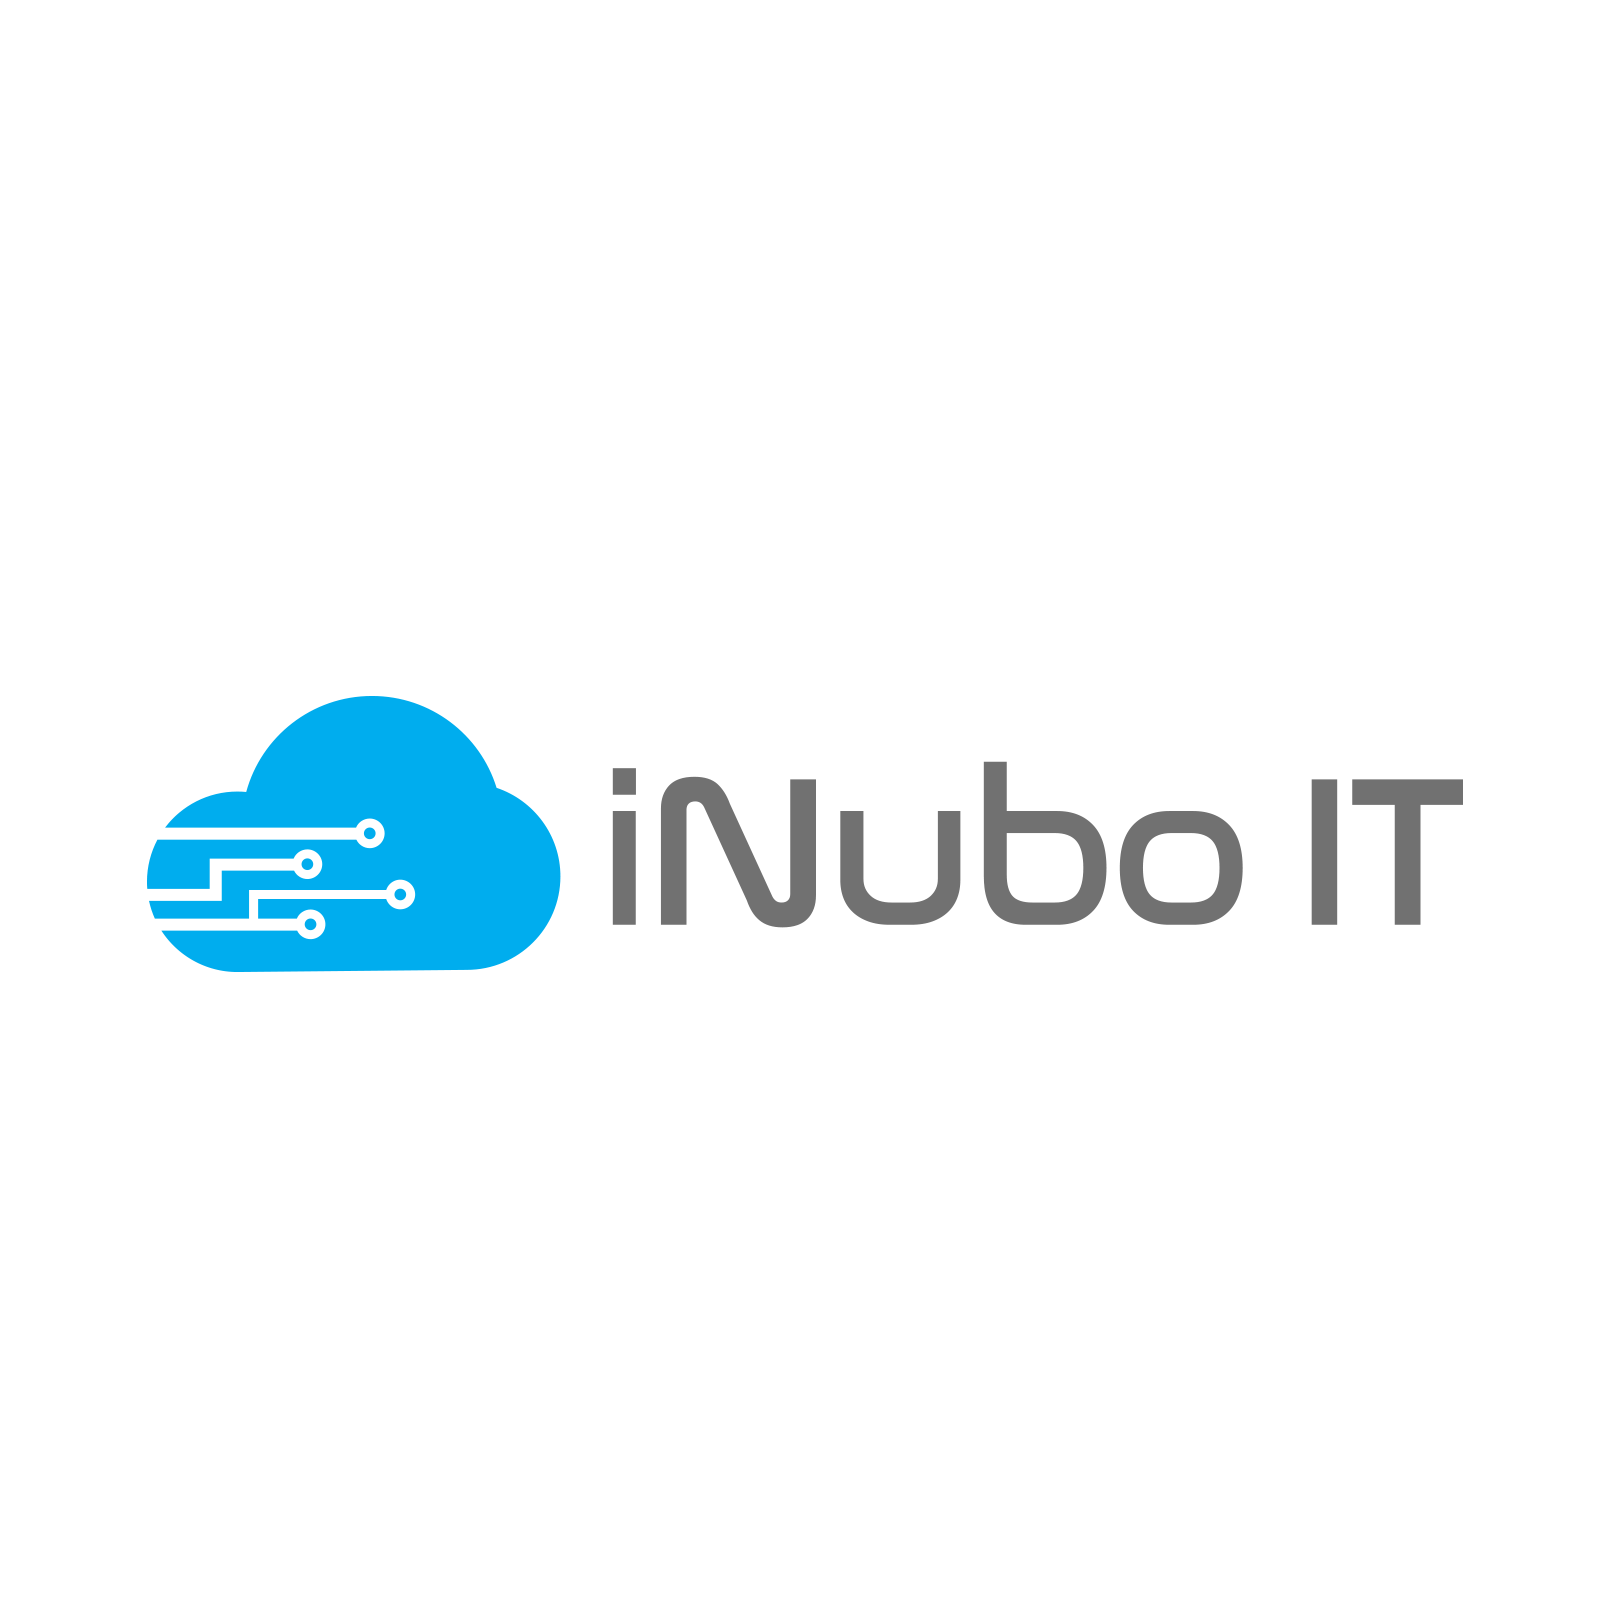 iNubo IT msp managed service provider